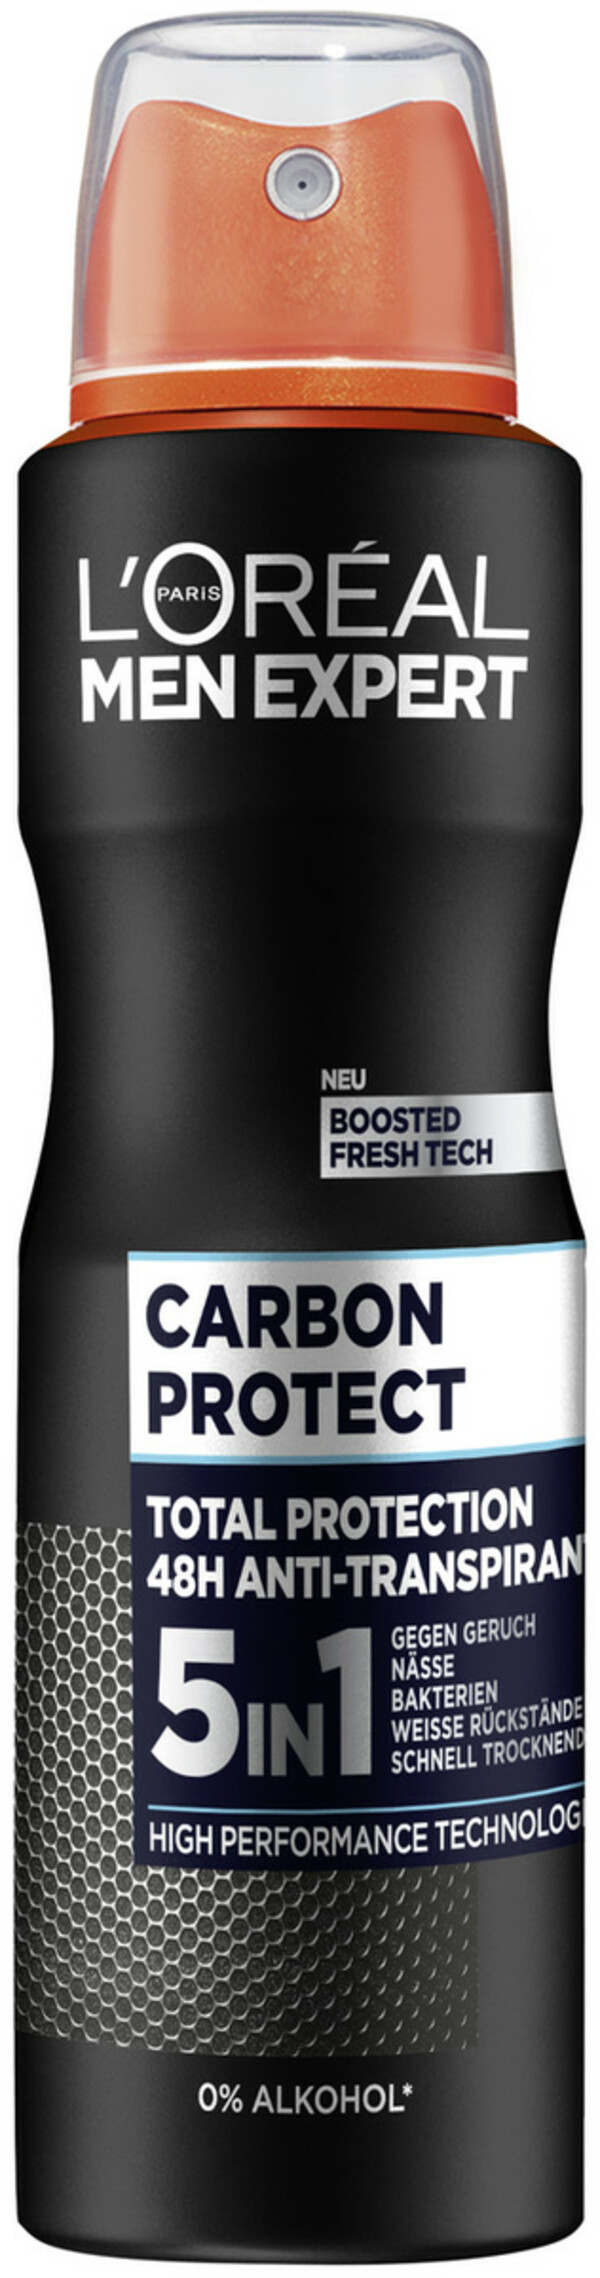 Bild 1 von Loreal Men Expert Carbon Protect Total Protection 48H Anti-Transpirant 150ML